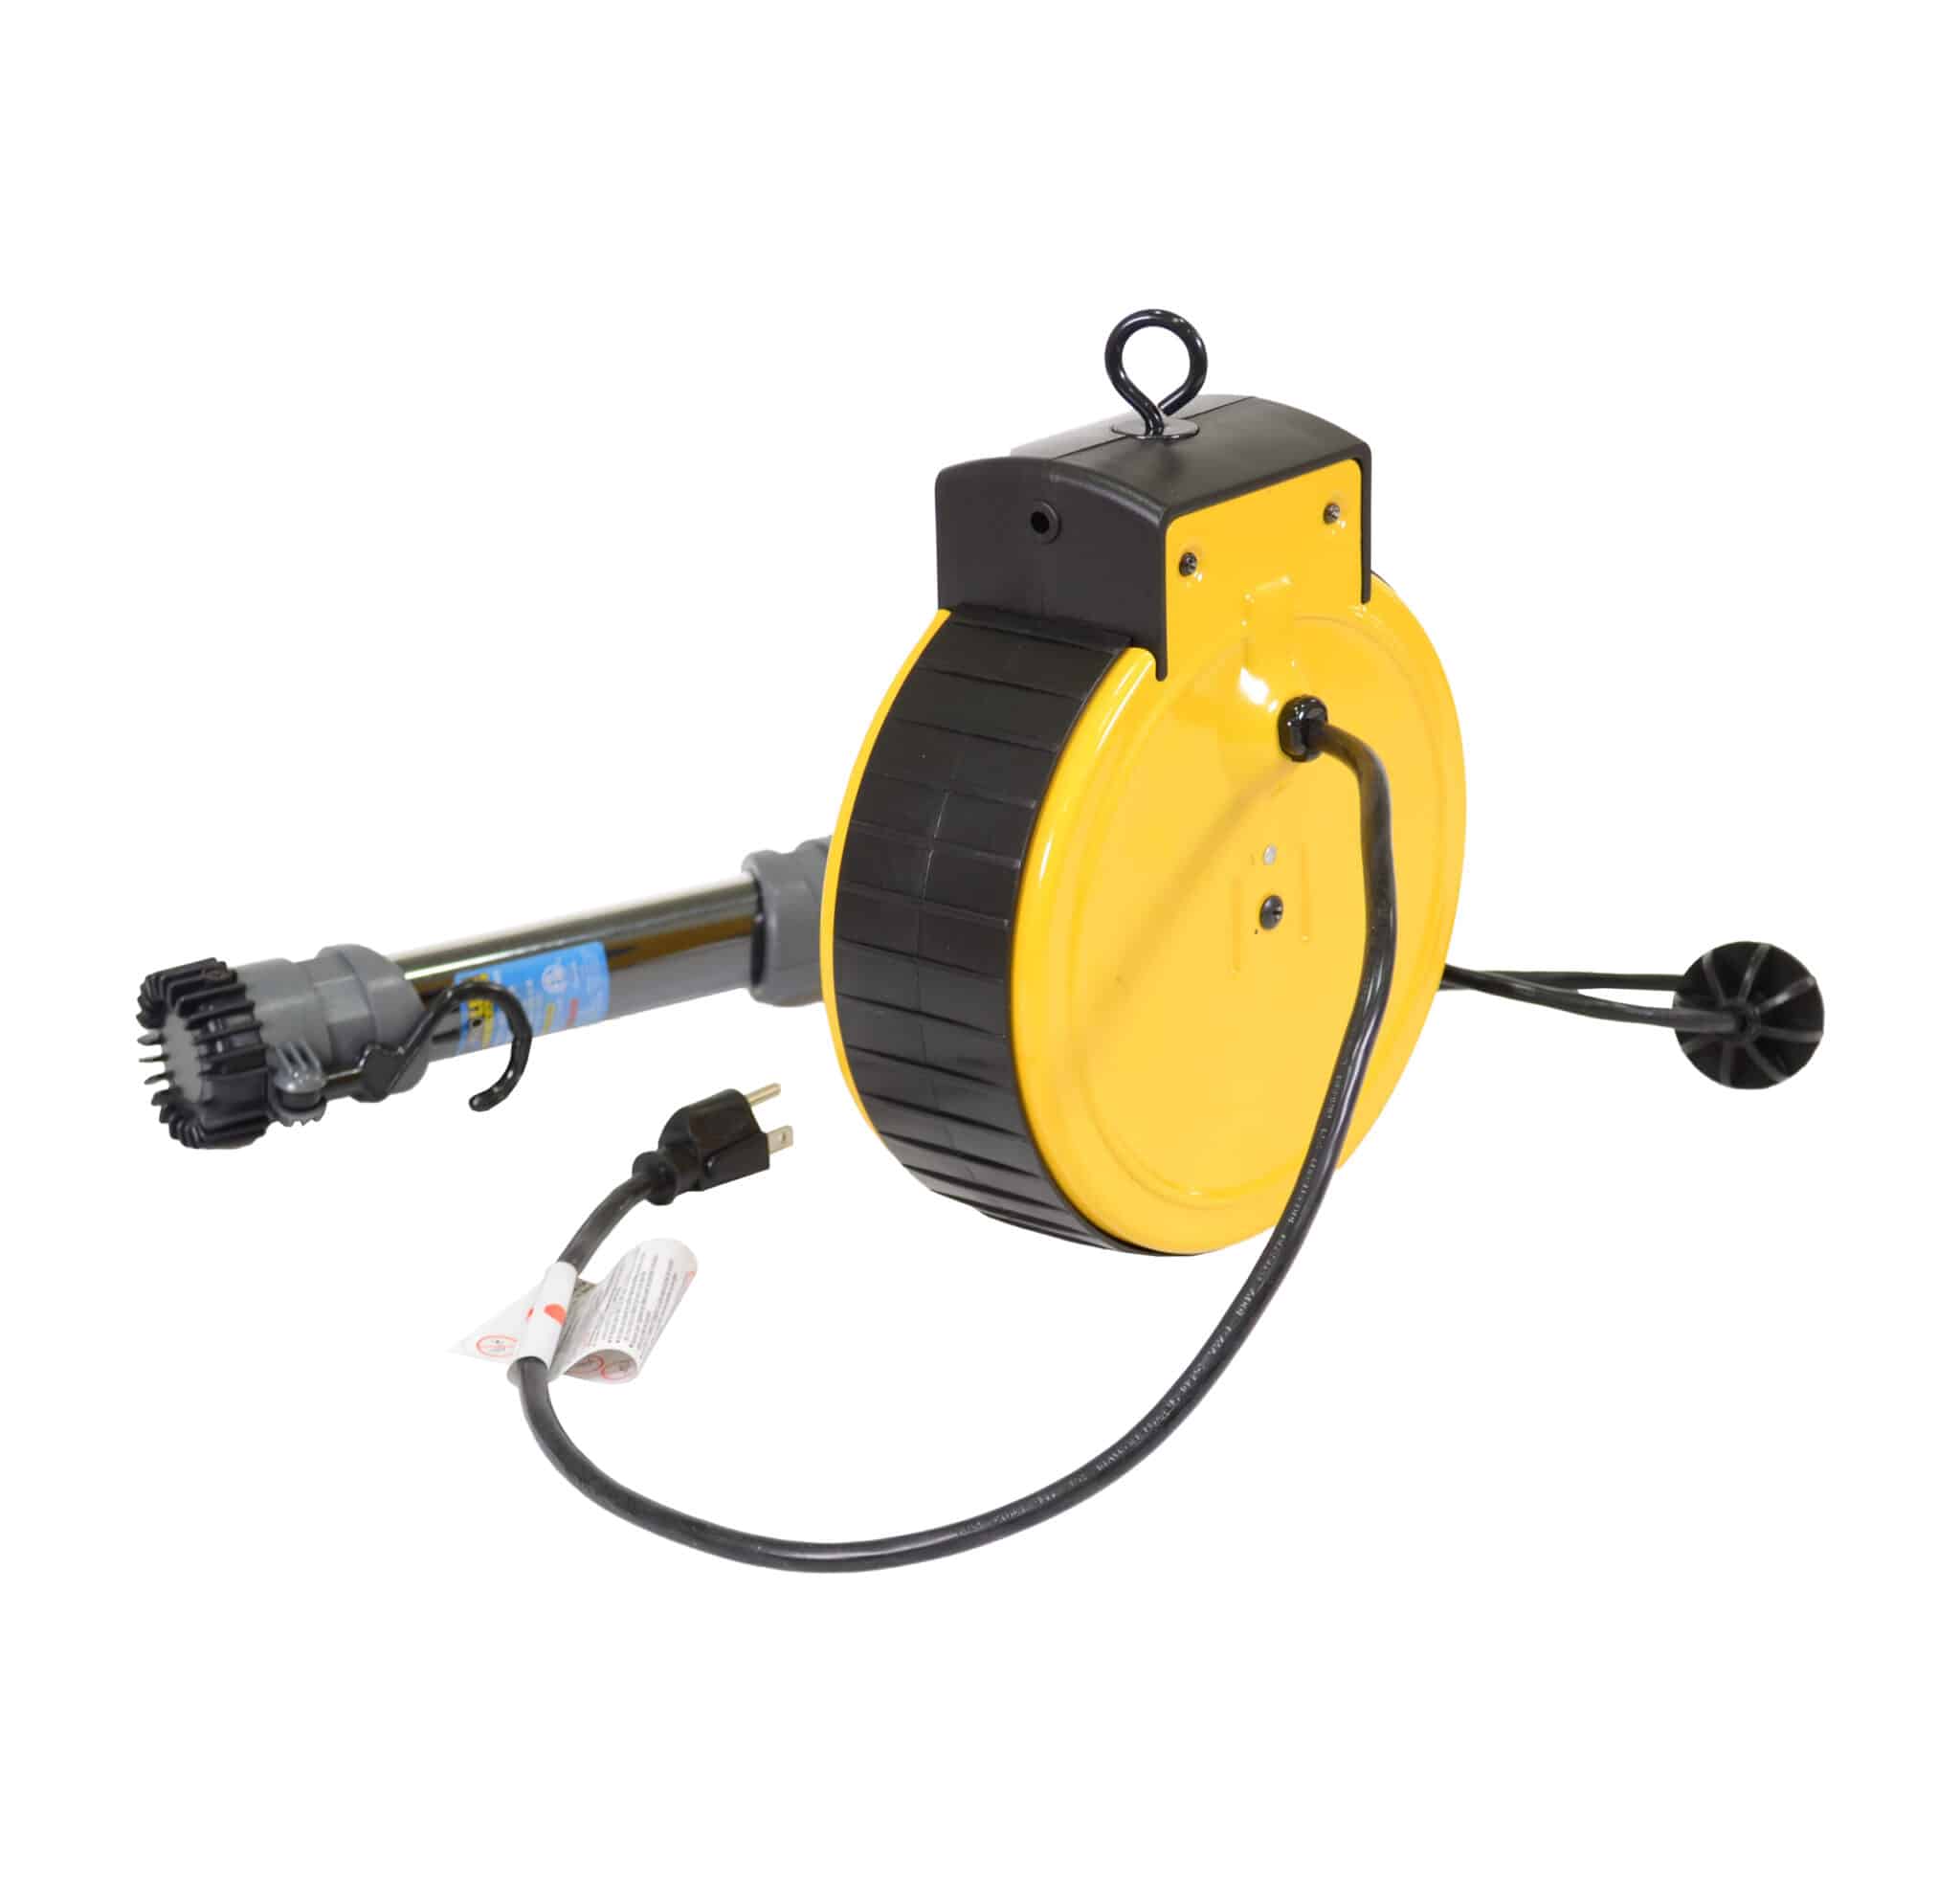  Alert Stamping 5050SM Pro-Lite 34 SMD LED Cord Reel Task  Light,Yellow, Grey, Black : כלי עבודה ושיפוץ ביתי